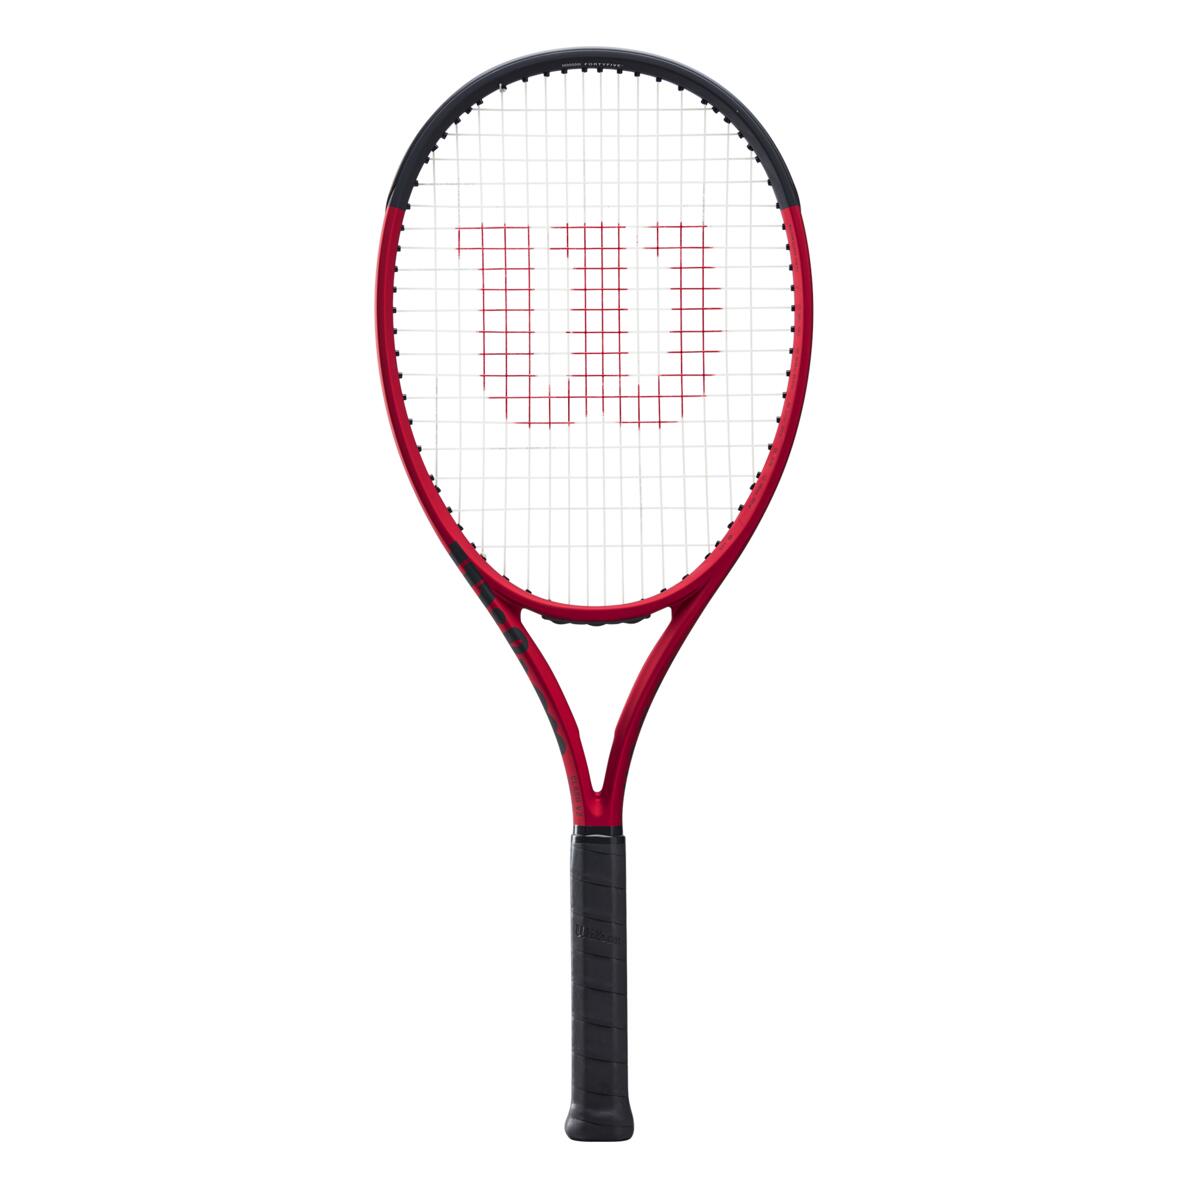 Head Velocity MLT 16/1.30 Tennis String (Pink)